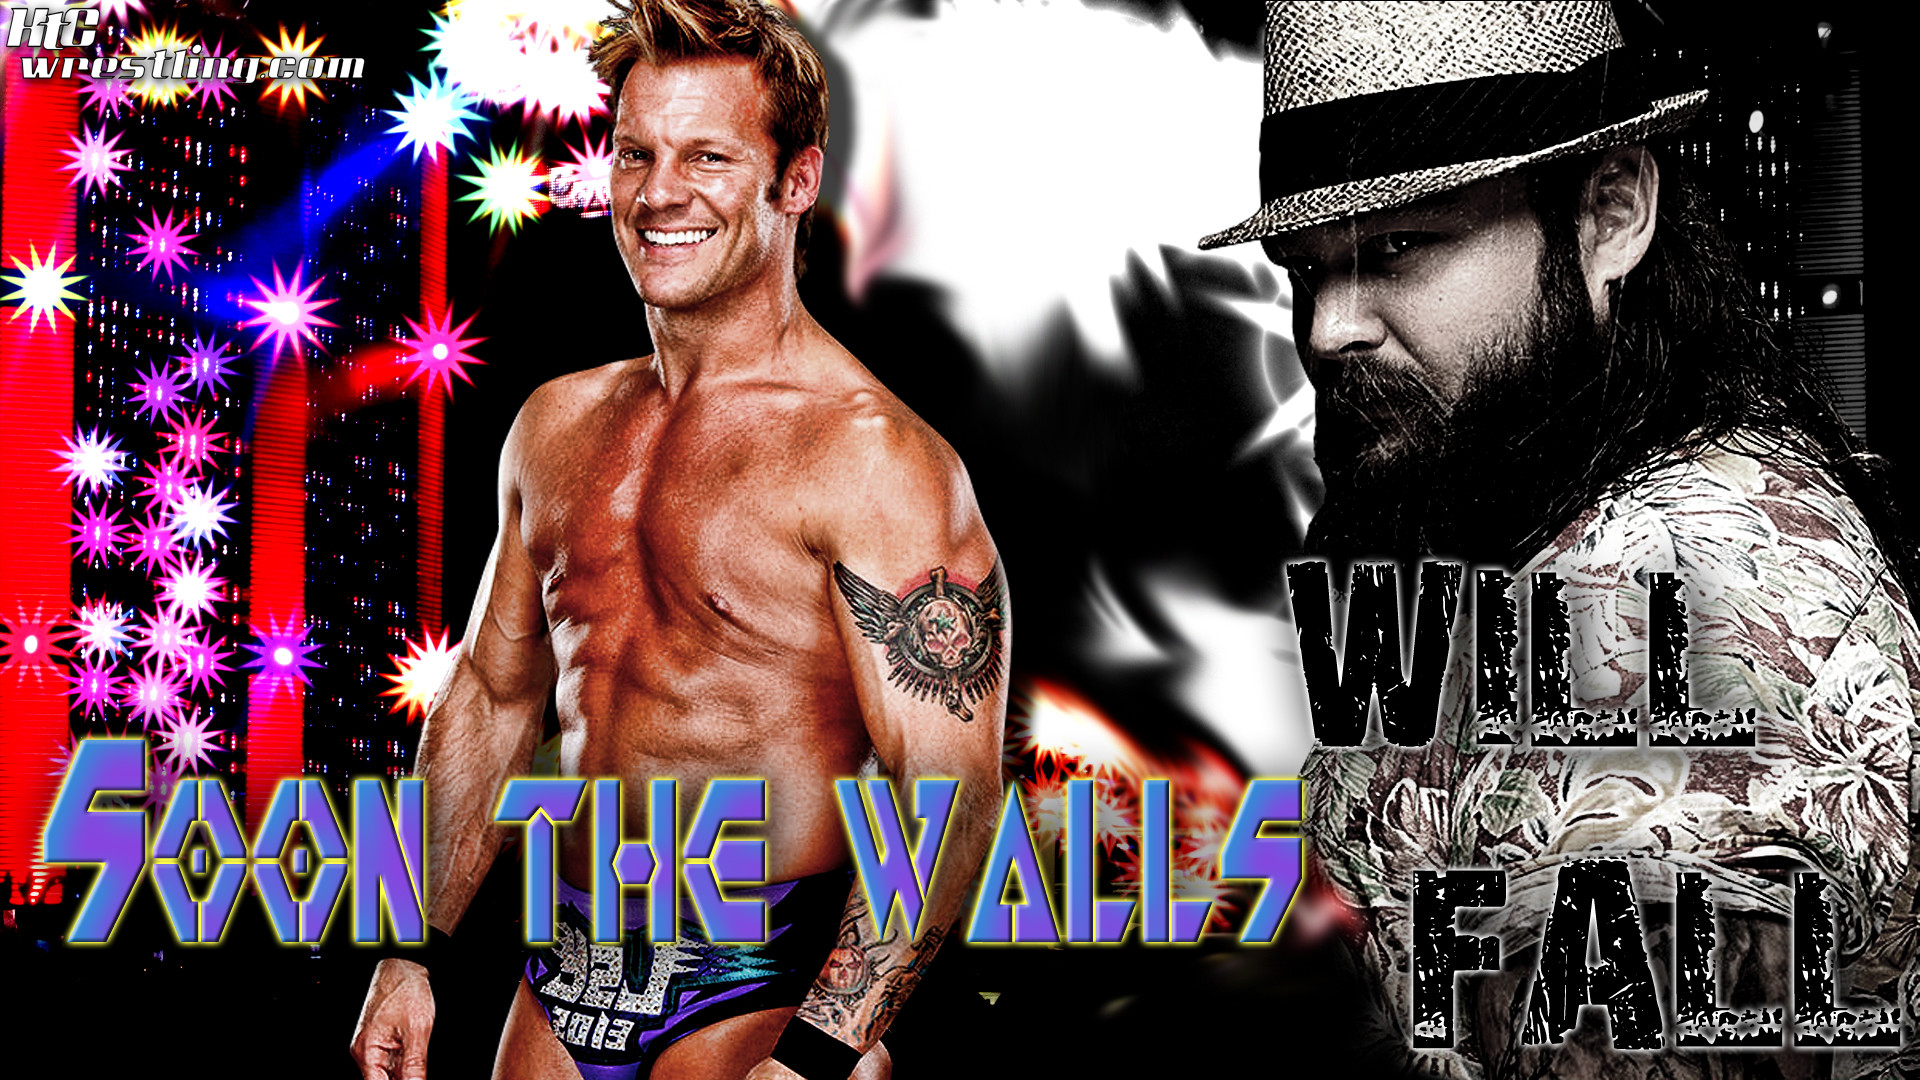 1920x1080 Wallpaper Of The Week: Chris Jericho vs Bray Wyatt – The Walls Will Fall